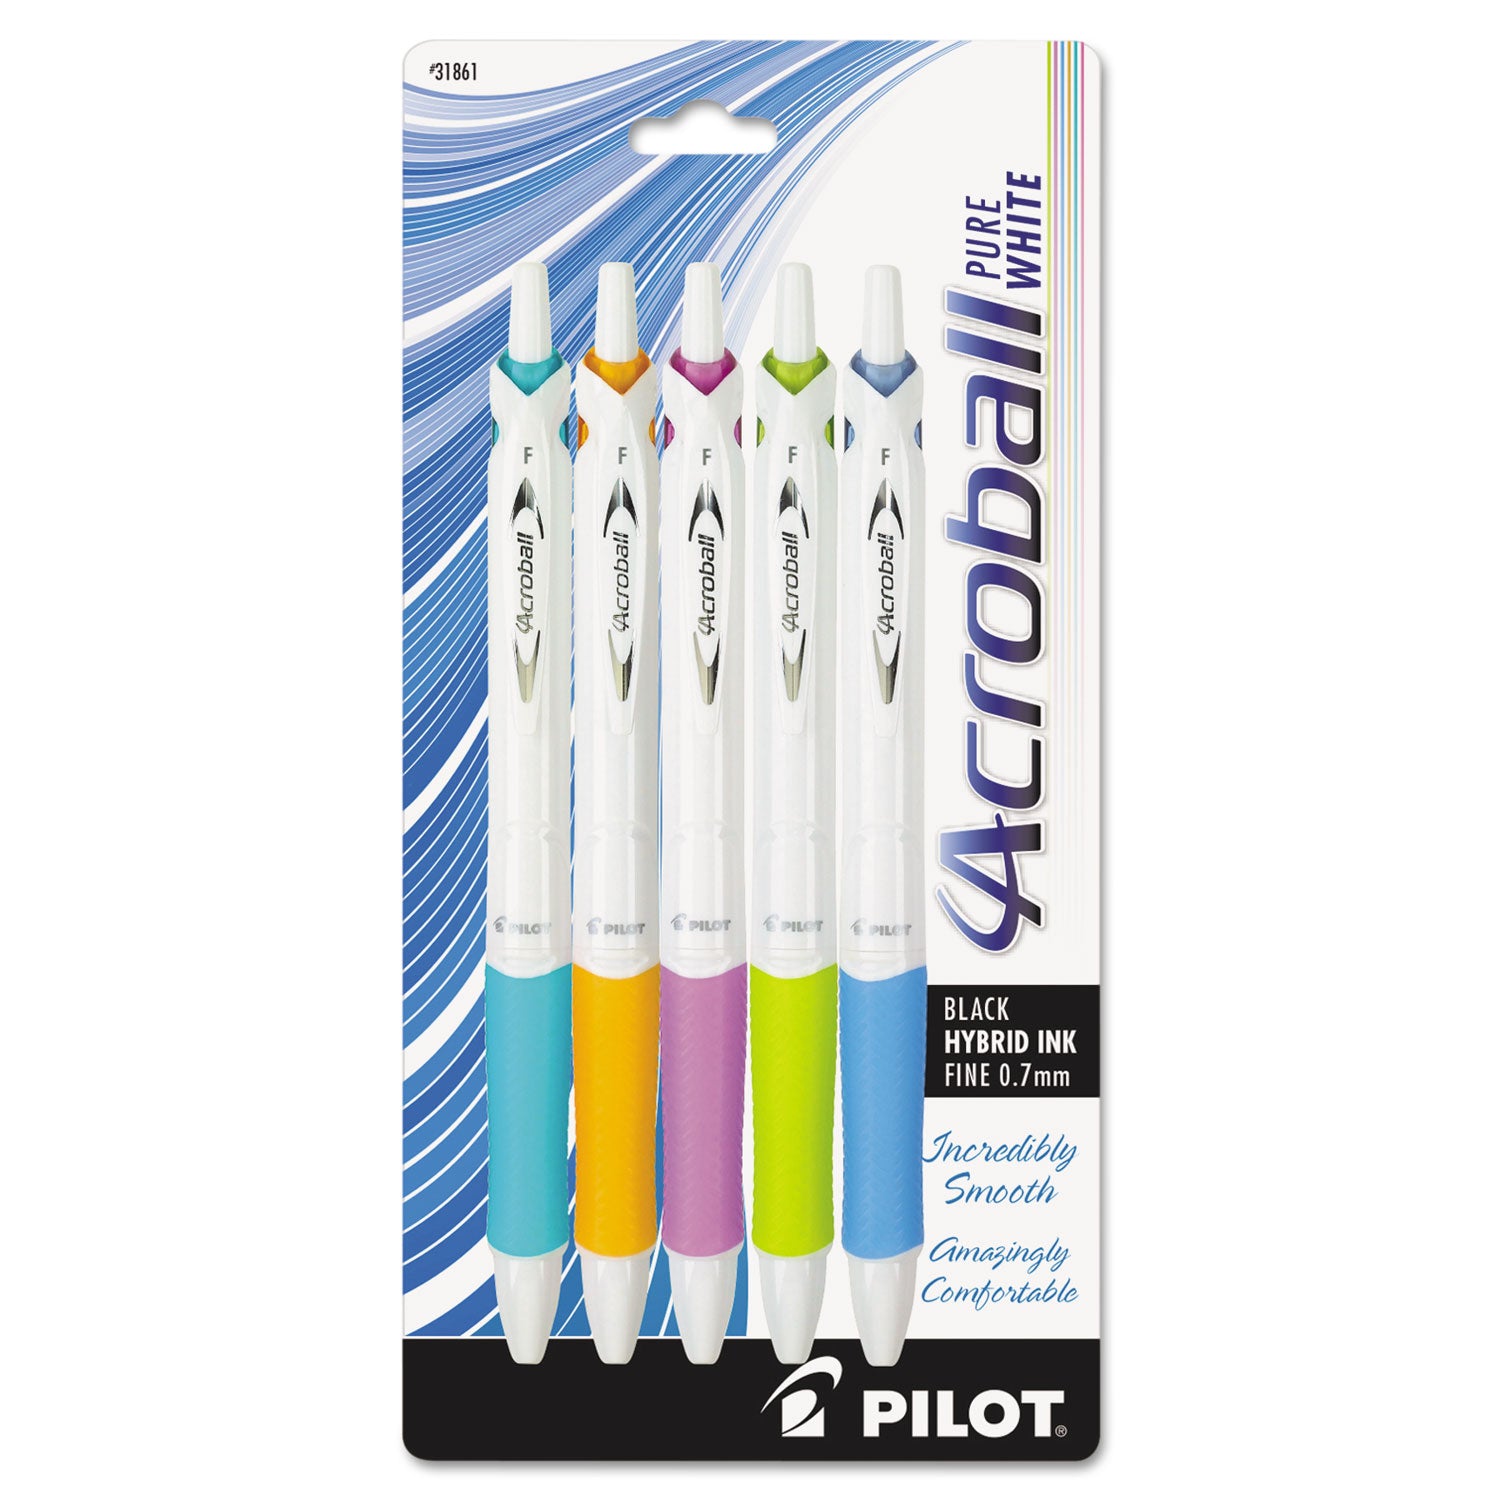 Acroball PureWhite Advanced Ink Hybrid Gel Pen, Retractable, Fine 0.7 mm, Black Ink, Assorted Barrel Colors, 5/Pack - 